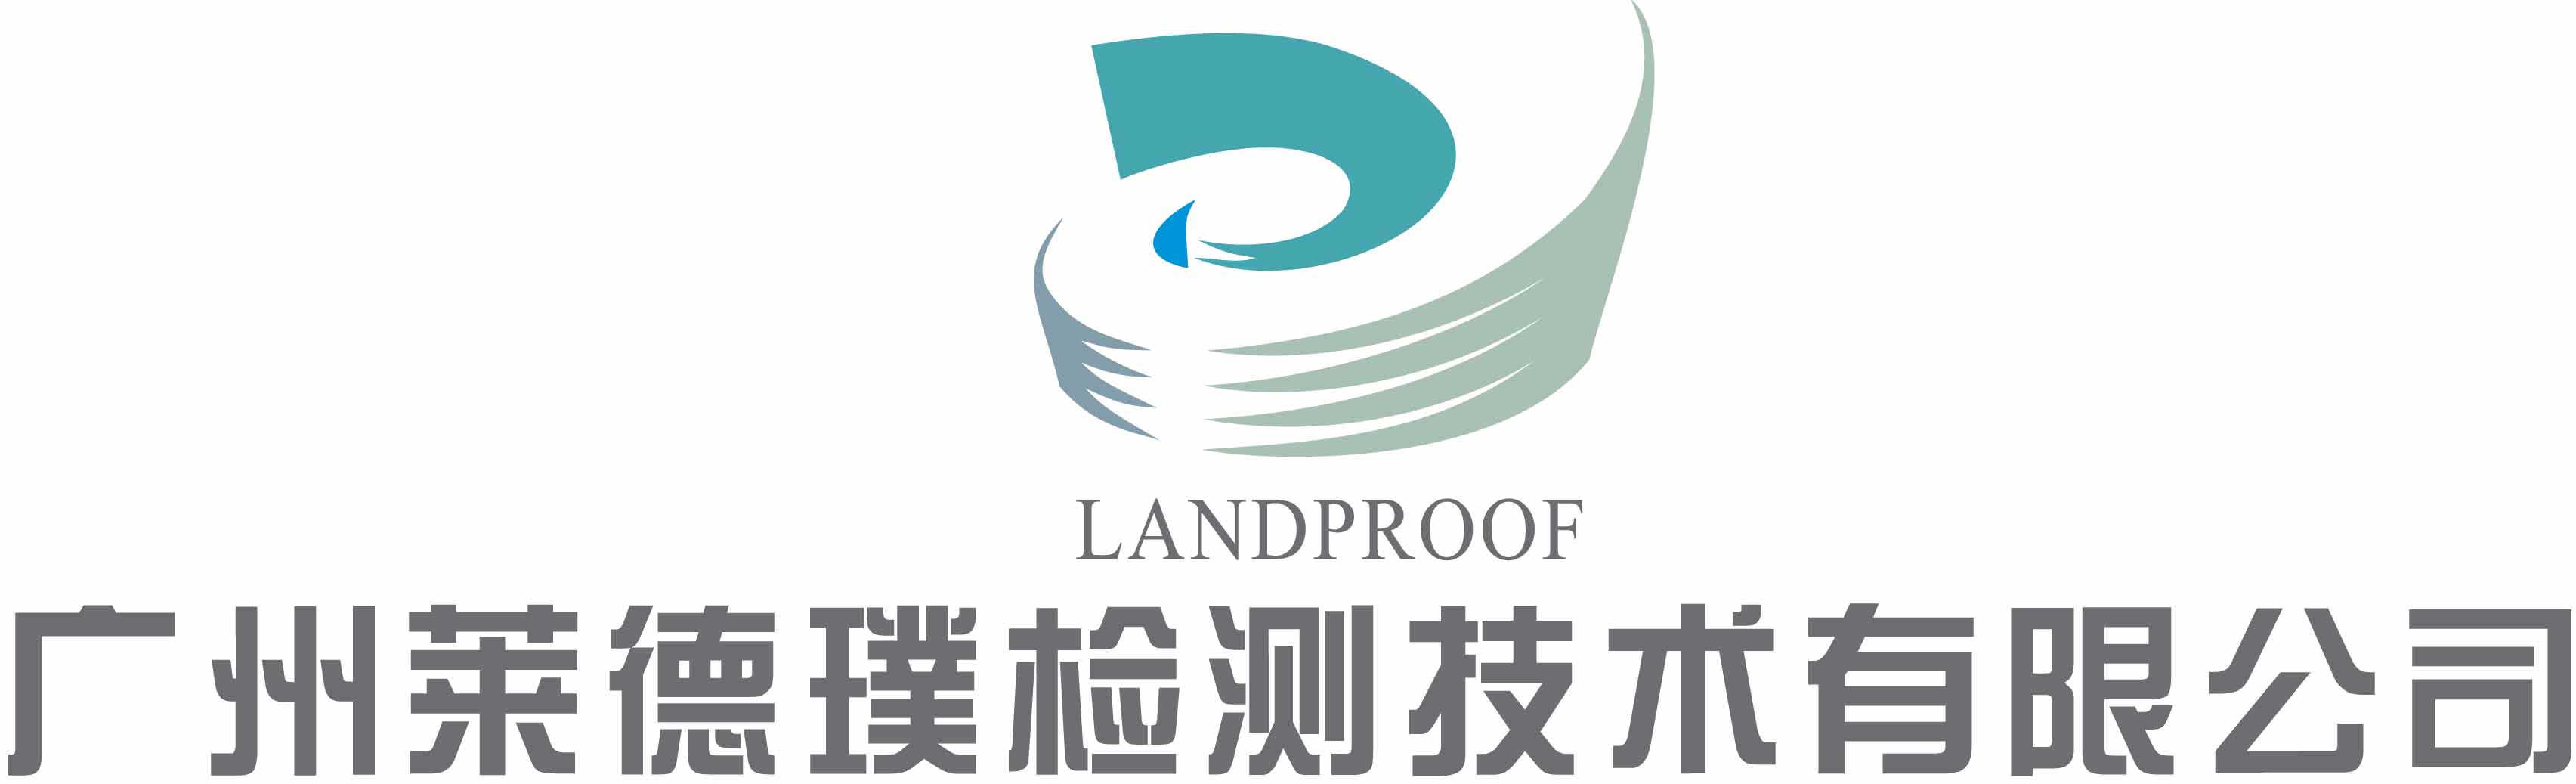 Landproof